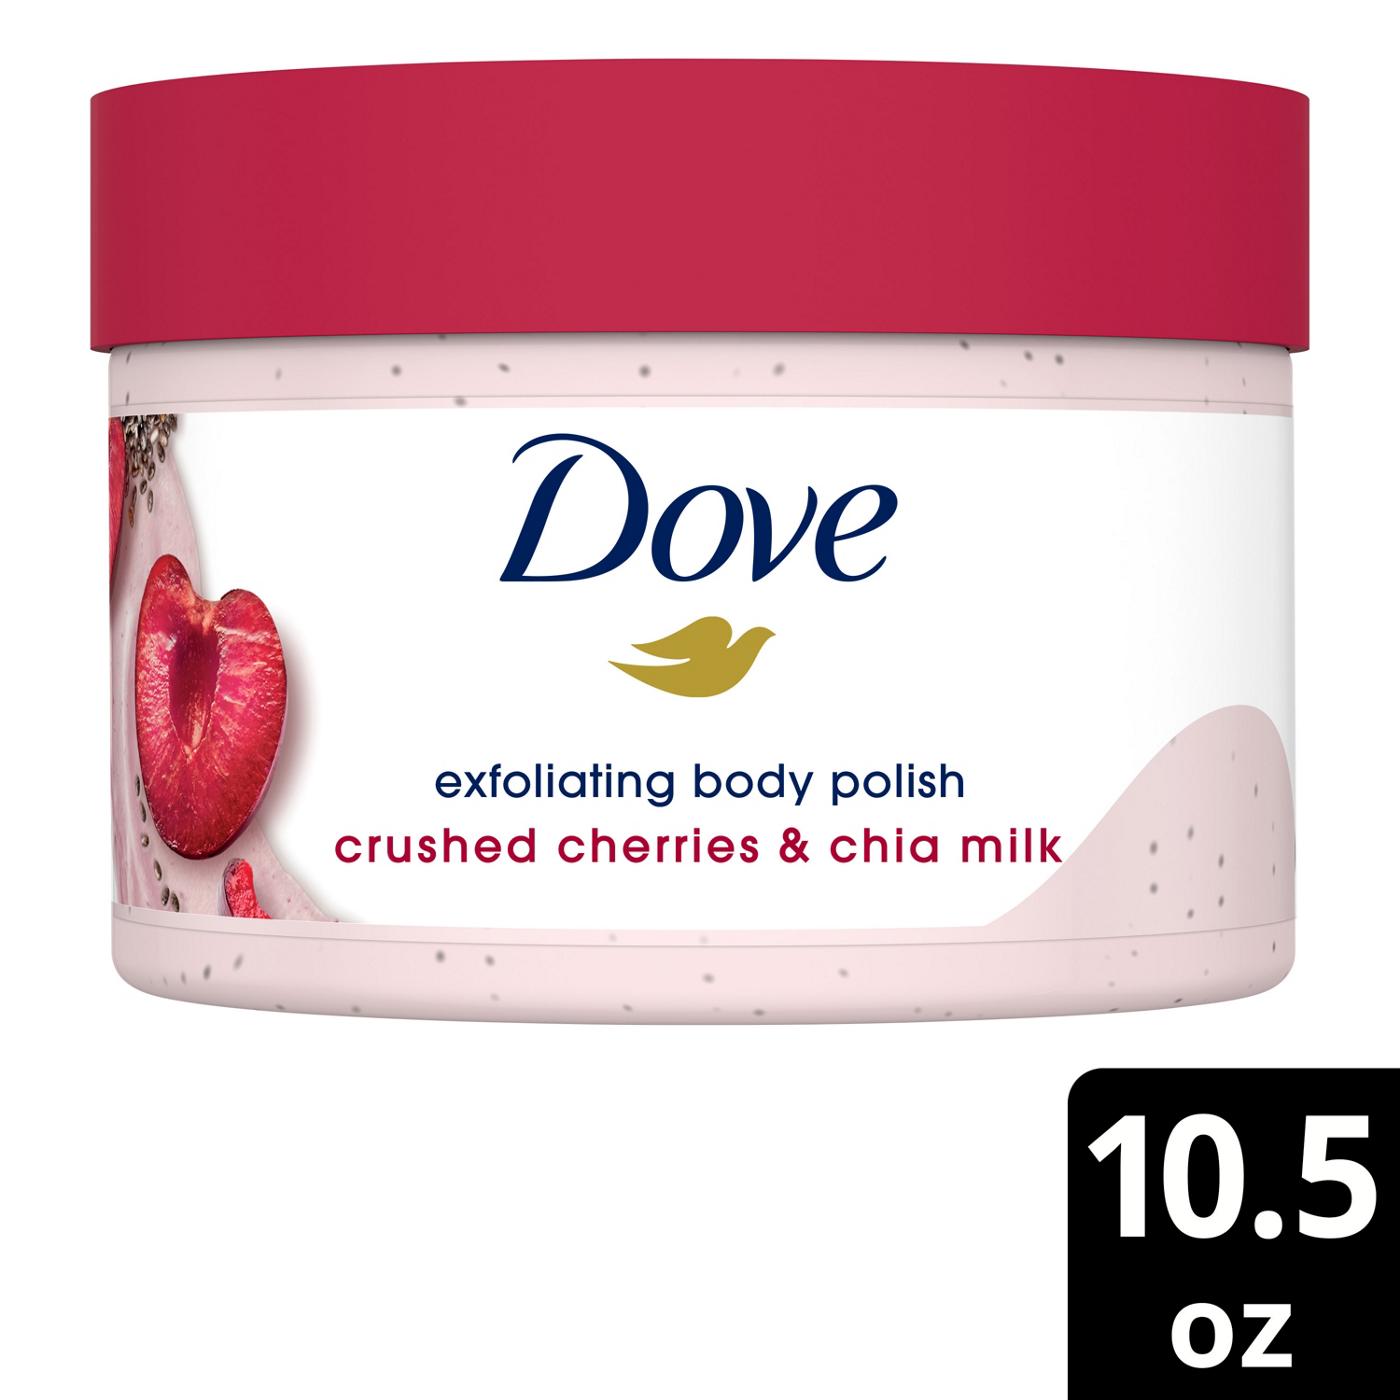 Dove Exfoliating Body Polish Crushed Cherries & Chia Milk; image 8 of 8